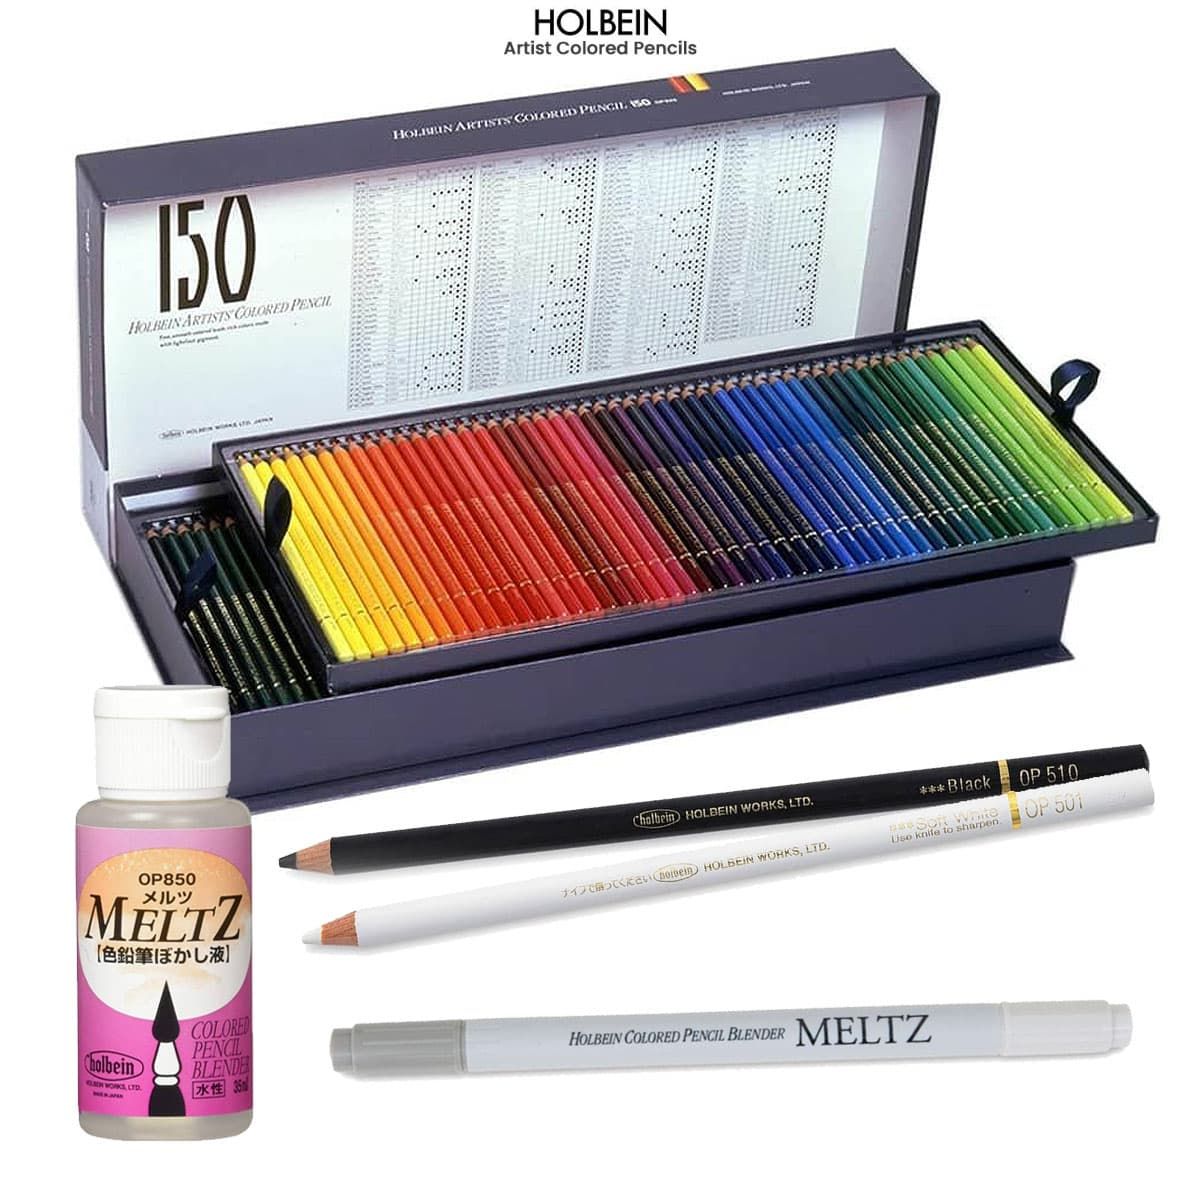 https://www.jerrysartarama.com/media/catalog/product/cache/ecb49a32eeb5603594b082bd5fe65733/h/o/holbein-artist-colored-pencils-sets.jpg